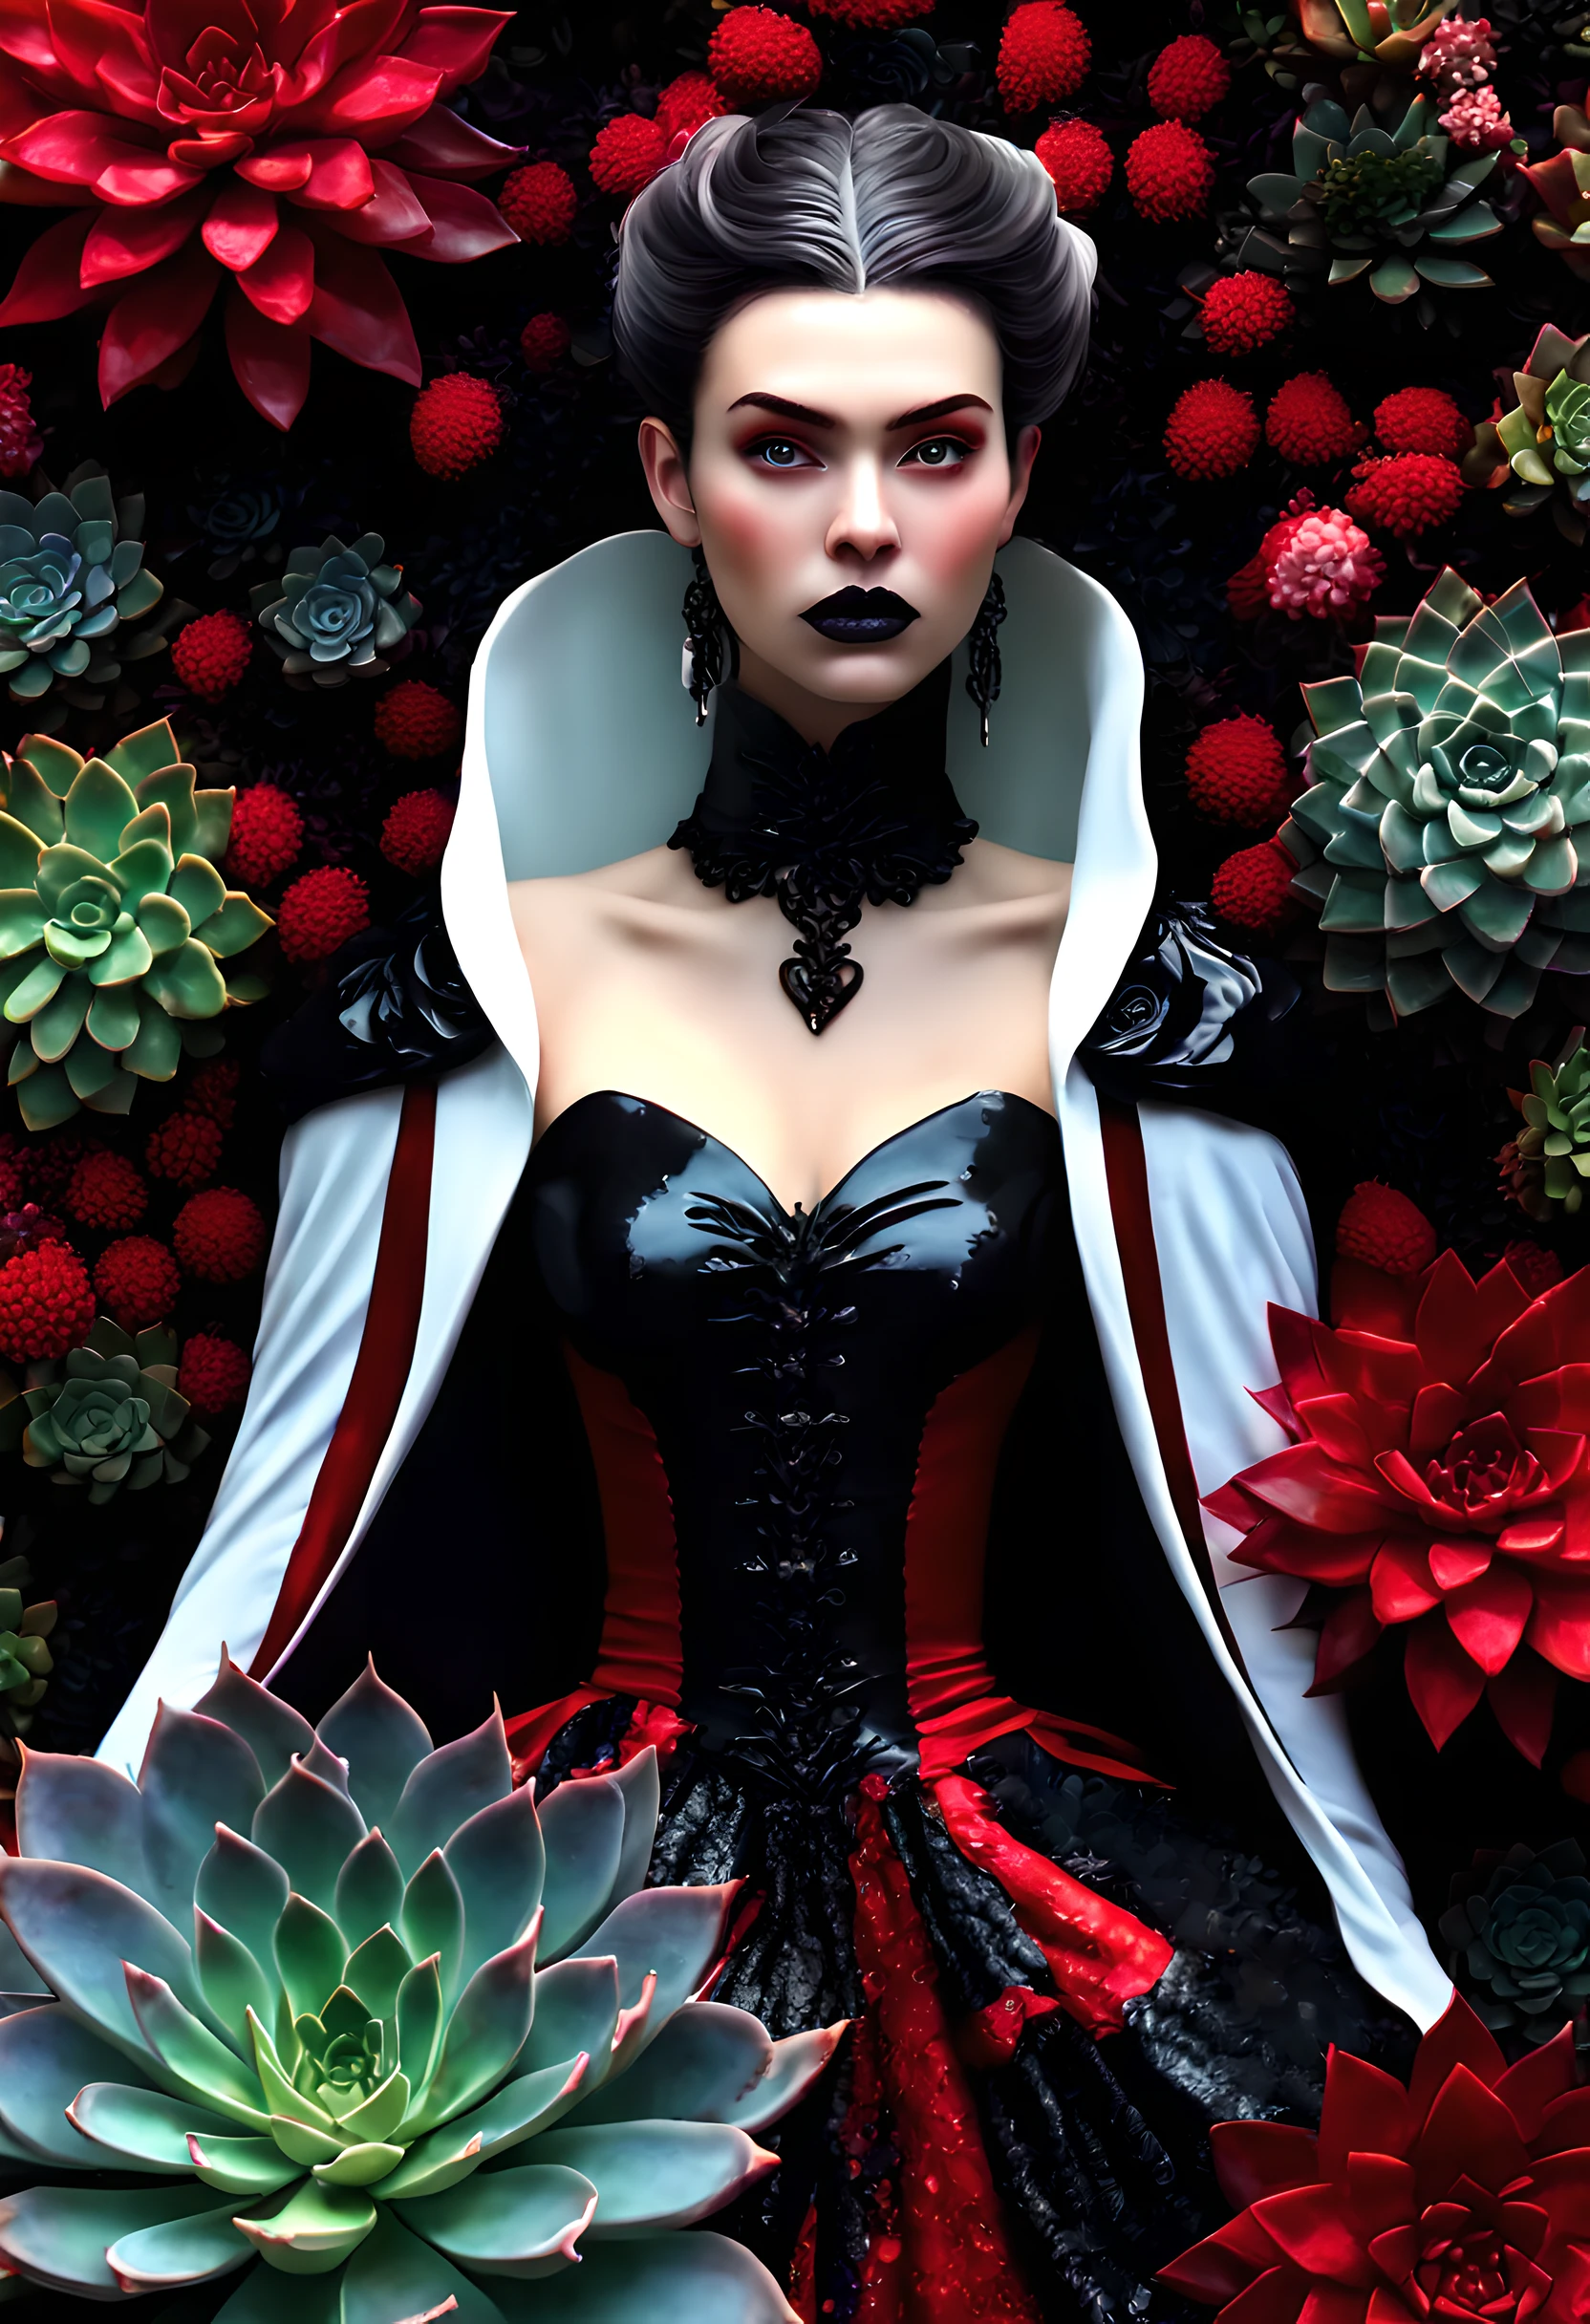 picture of a vampire woman 쉬고있는 a (검은색:1.2) 그리고 (빨간색:1.2) colo빨간색 succulents meadow, 전신, 절묘한 아름다운 (매우 상세한, 걸작, 최고의 품질: 1.4) 여자 뱀파이어 여자, 동적 각도 (가장 상세한, 걸작, 최고의 품질), 매우 상세한 face (매우 상세한, 걸작, 최고의 품질), 극도로 여성스러운, 회색 피부, 금발, 구불 거리는 머리카락, 역동적인 눈 색깔, 차가운 눈, 빛나는 눈, 강렬한 눈빛, dark 빨간색 lips, [송곳니], 흰 드레스를 입고, 우아한 스타일의 드레스 (매우 상세한, 걸작, 최고의 품질), 파란색 망토를 입고 (매우 상세한, 걸작, 최고의 품질), 긴 망토, 흐르는 망토 (매우 상세한, 걸작, 최고의 품질), 하이힐 부츠를 신고, 쉬고있는 (검은색 그리고 빨간색 colo빨간색 succulents meadow: 1.6), 피가 뚝뚝 떨어지는 다육식물, full colo빨간색, (완벽한 스펙트럼: 1.3),( 활기찬 작품: 1.4) vibrant shades of 빨간색, 그리고 검은색) 달이 뜨다, 달빛, 밤이야, 높은 세부 사항, 판타지 아트, RPG art 최고의 품질, 16,000, [매우 상세한], 걸작, 최고의 품질, (매우 상세한), 전신, 울트라 와이드 샷, 사실적인, 길드 전쟁